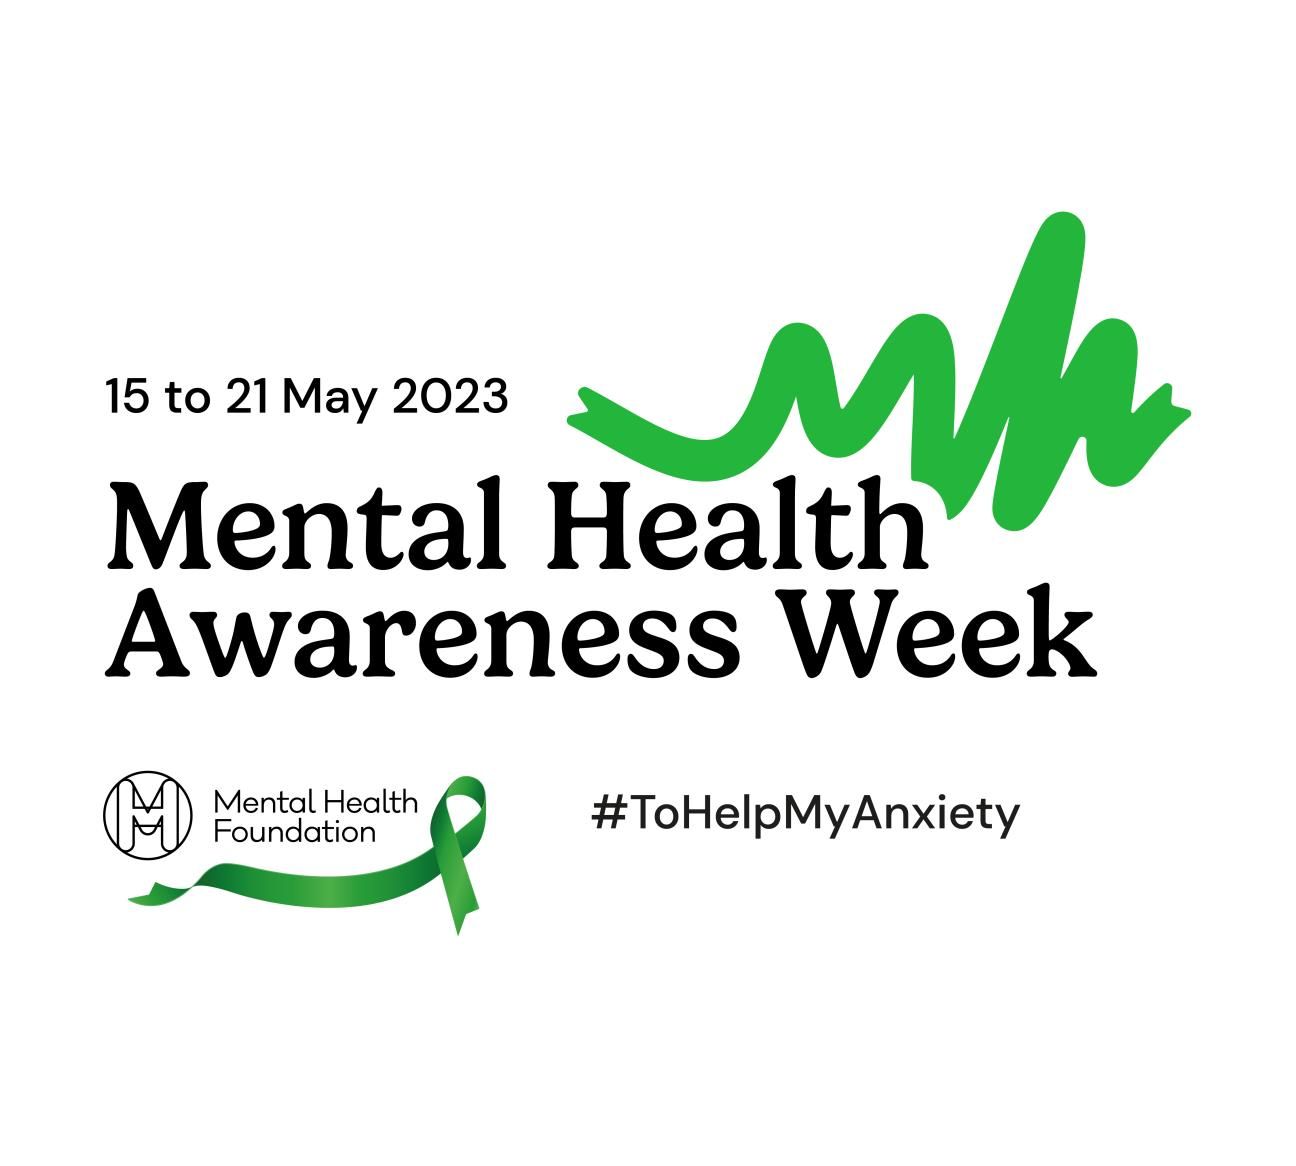 Mental Health Awareness Week - 15 to 21 May 2023